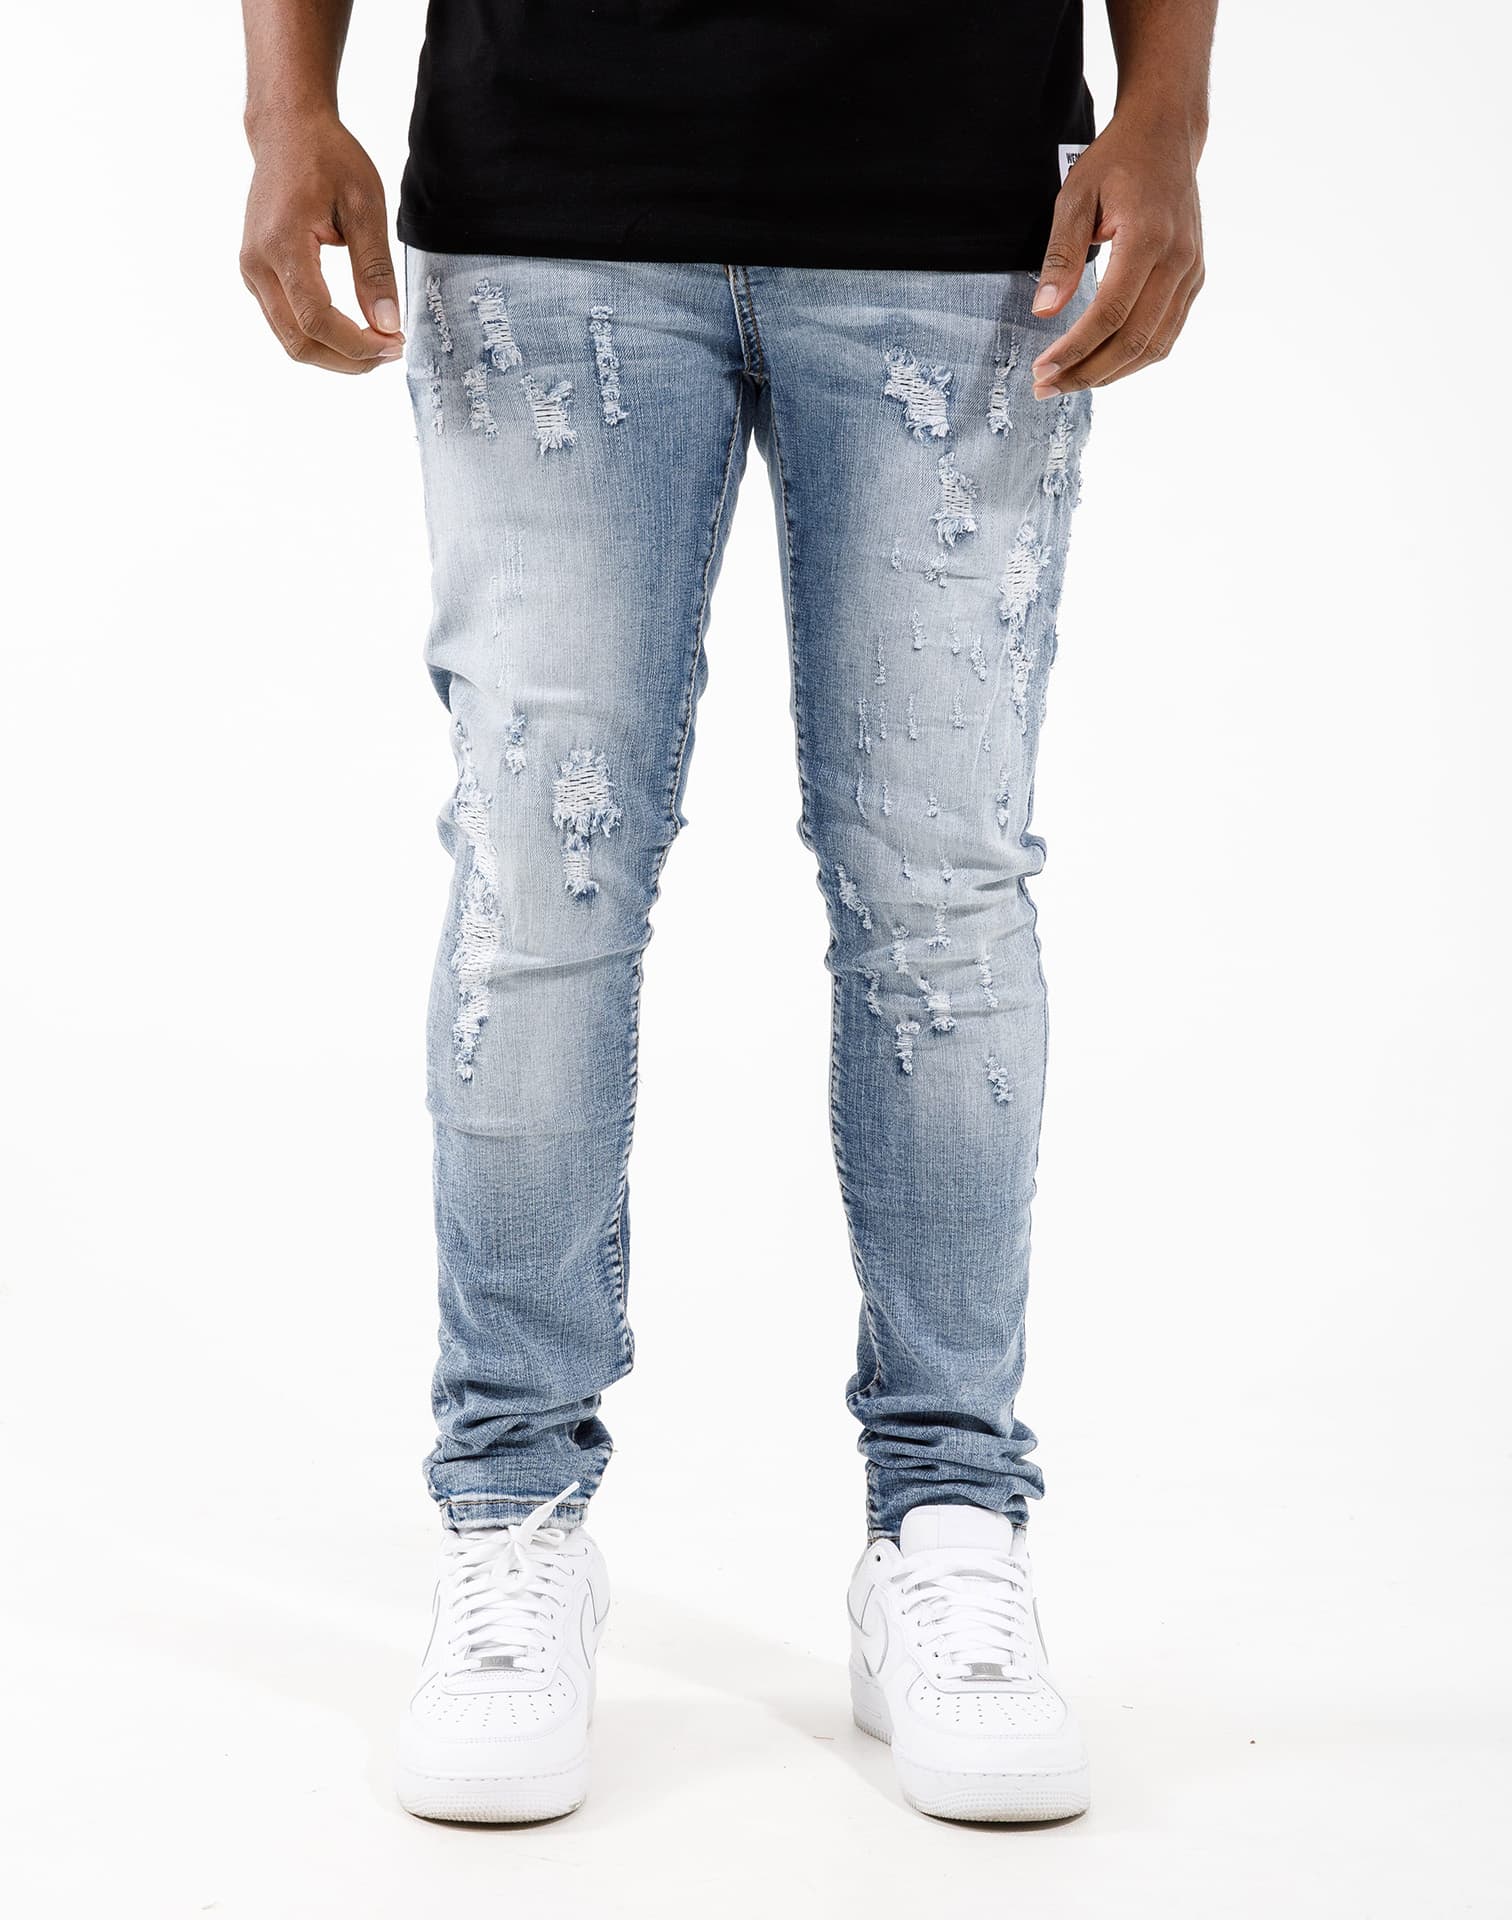 United Cotes Industrial Indigo Jeans  - Blue - Size: 32